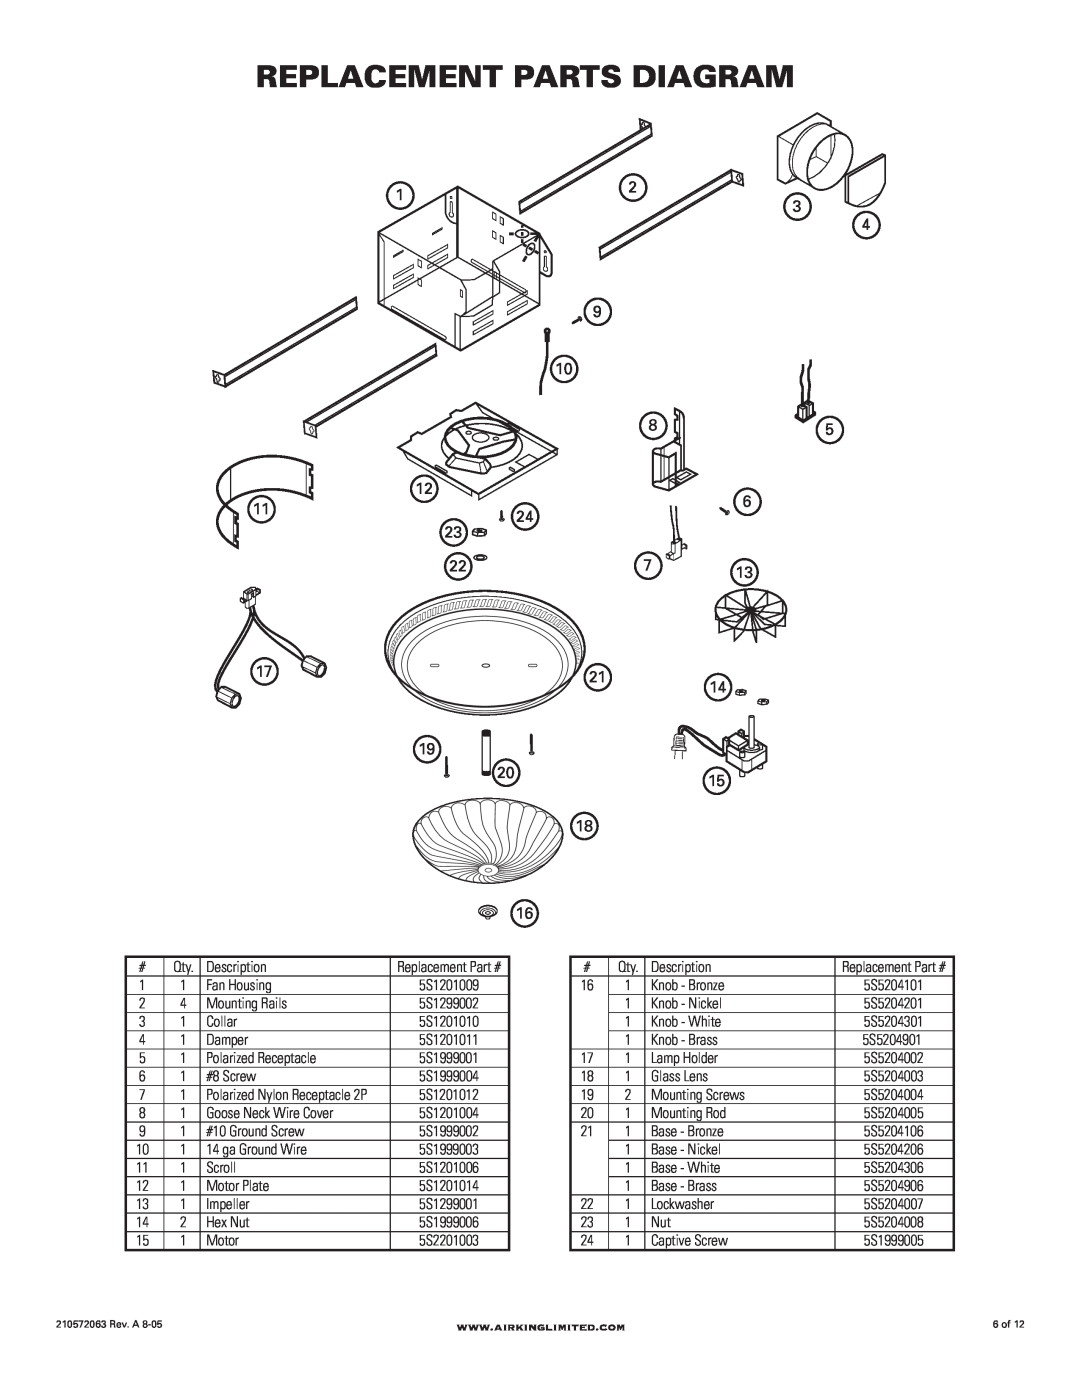 Air King DRLC702, DRLC703, DRLC701, DRLC709 manual Replacement Parts Diagram 